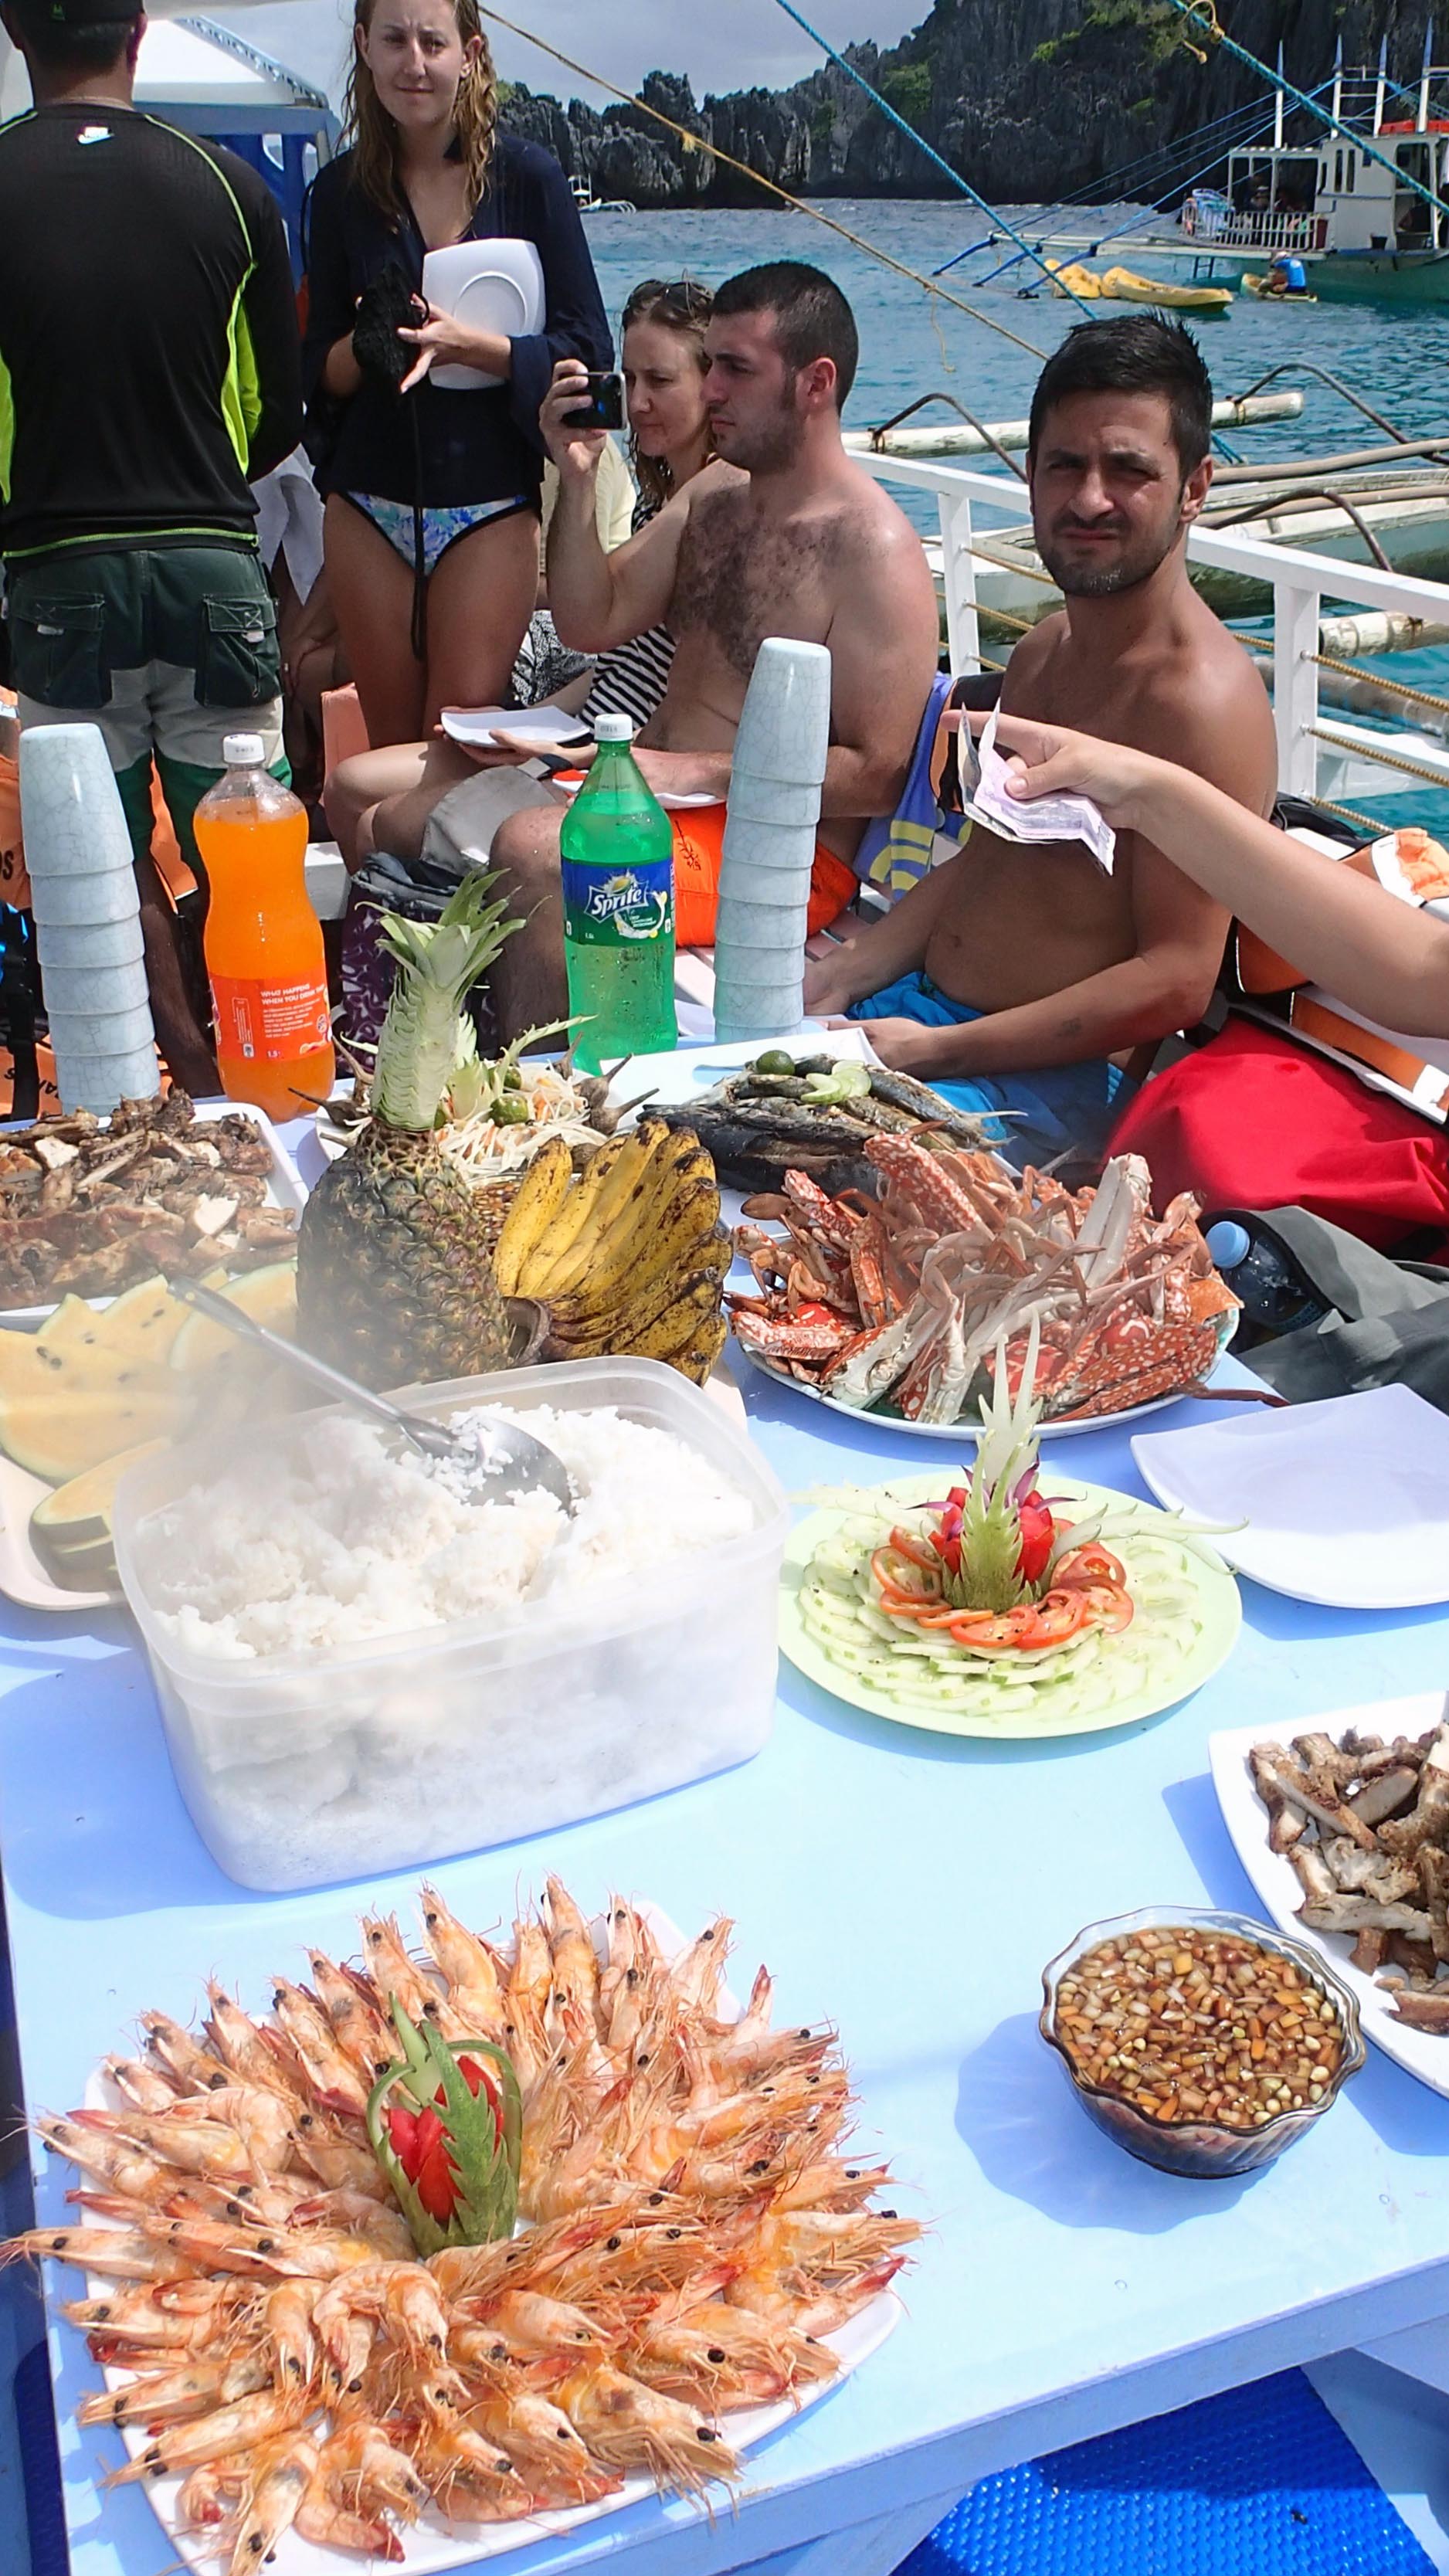 seafood lunch spread.jpg